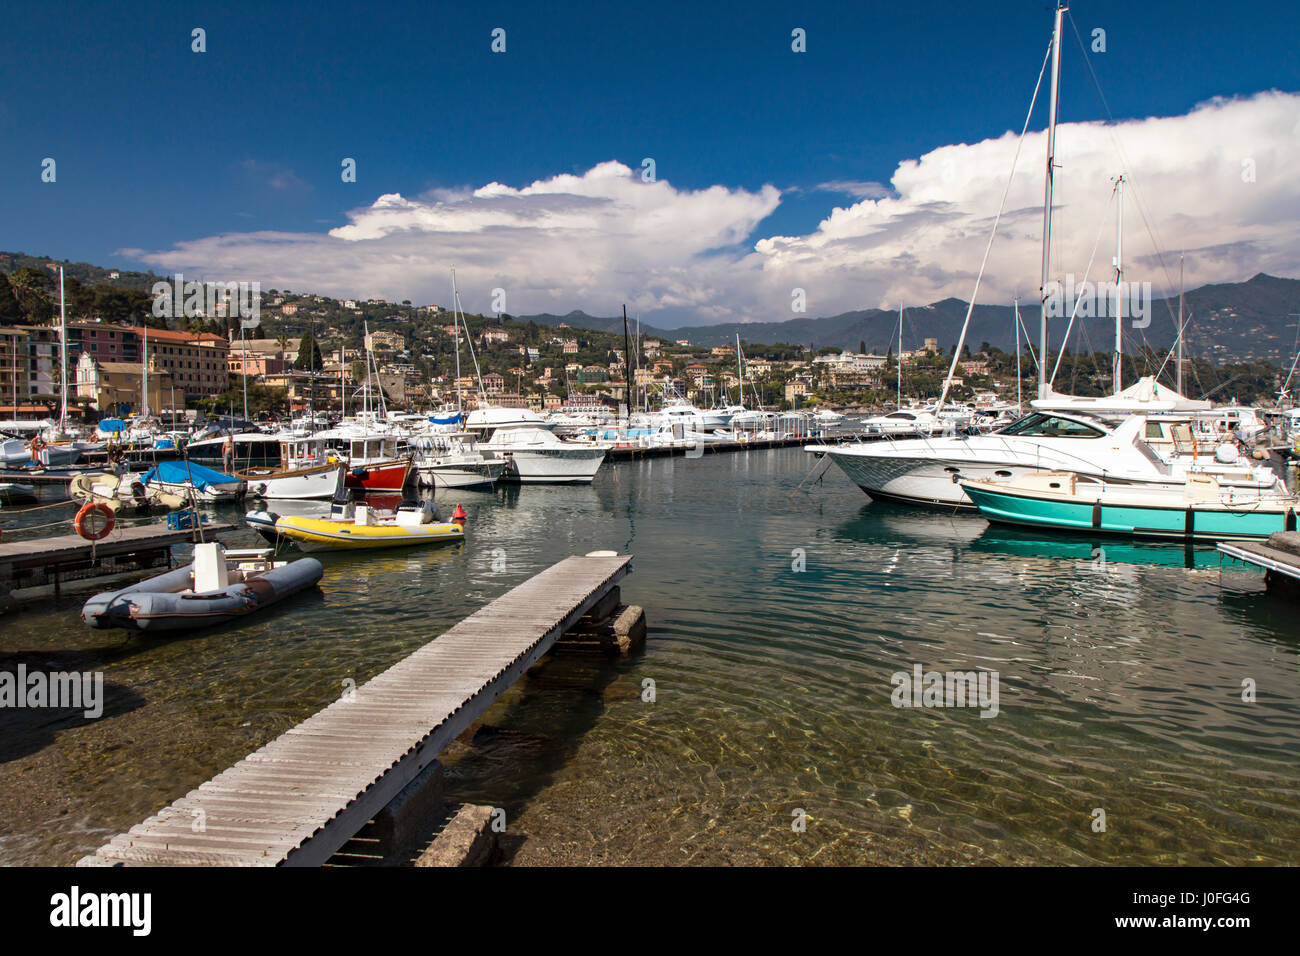 Boats moored in a sheltered marina in Santa Margherita Ligure, Liguria, Genoa , Italy a popular tourist destination in a scenic landscape under a clou Stock Photo